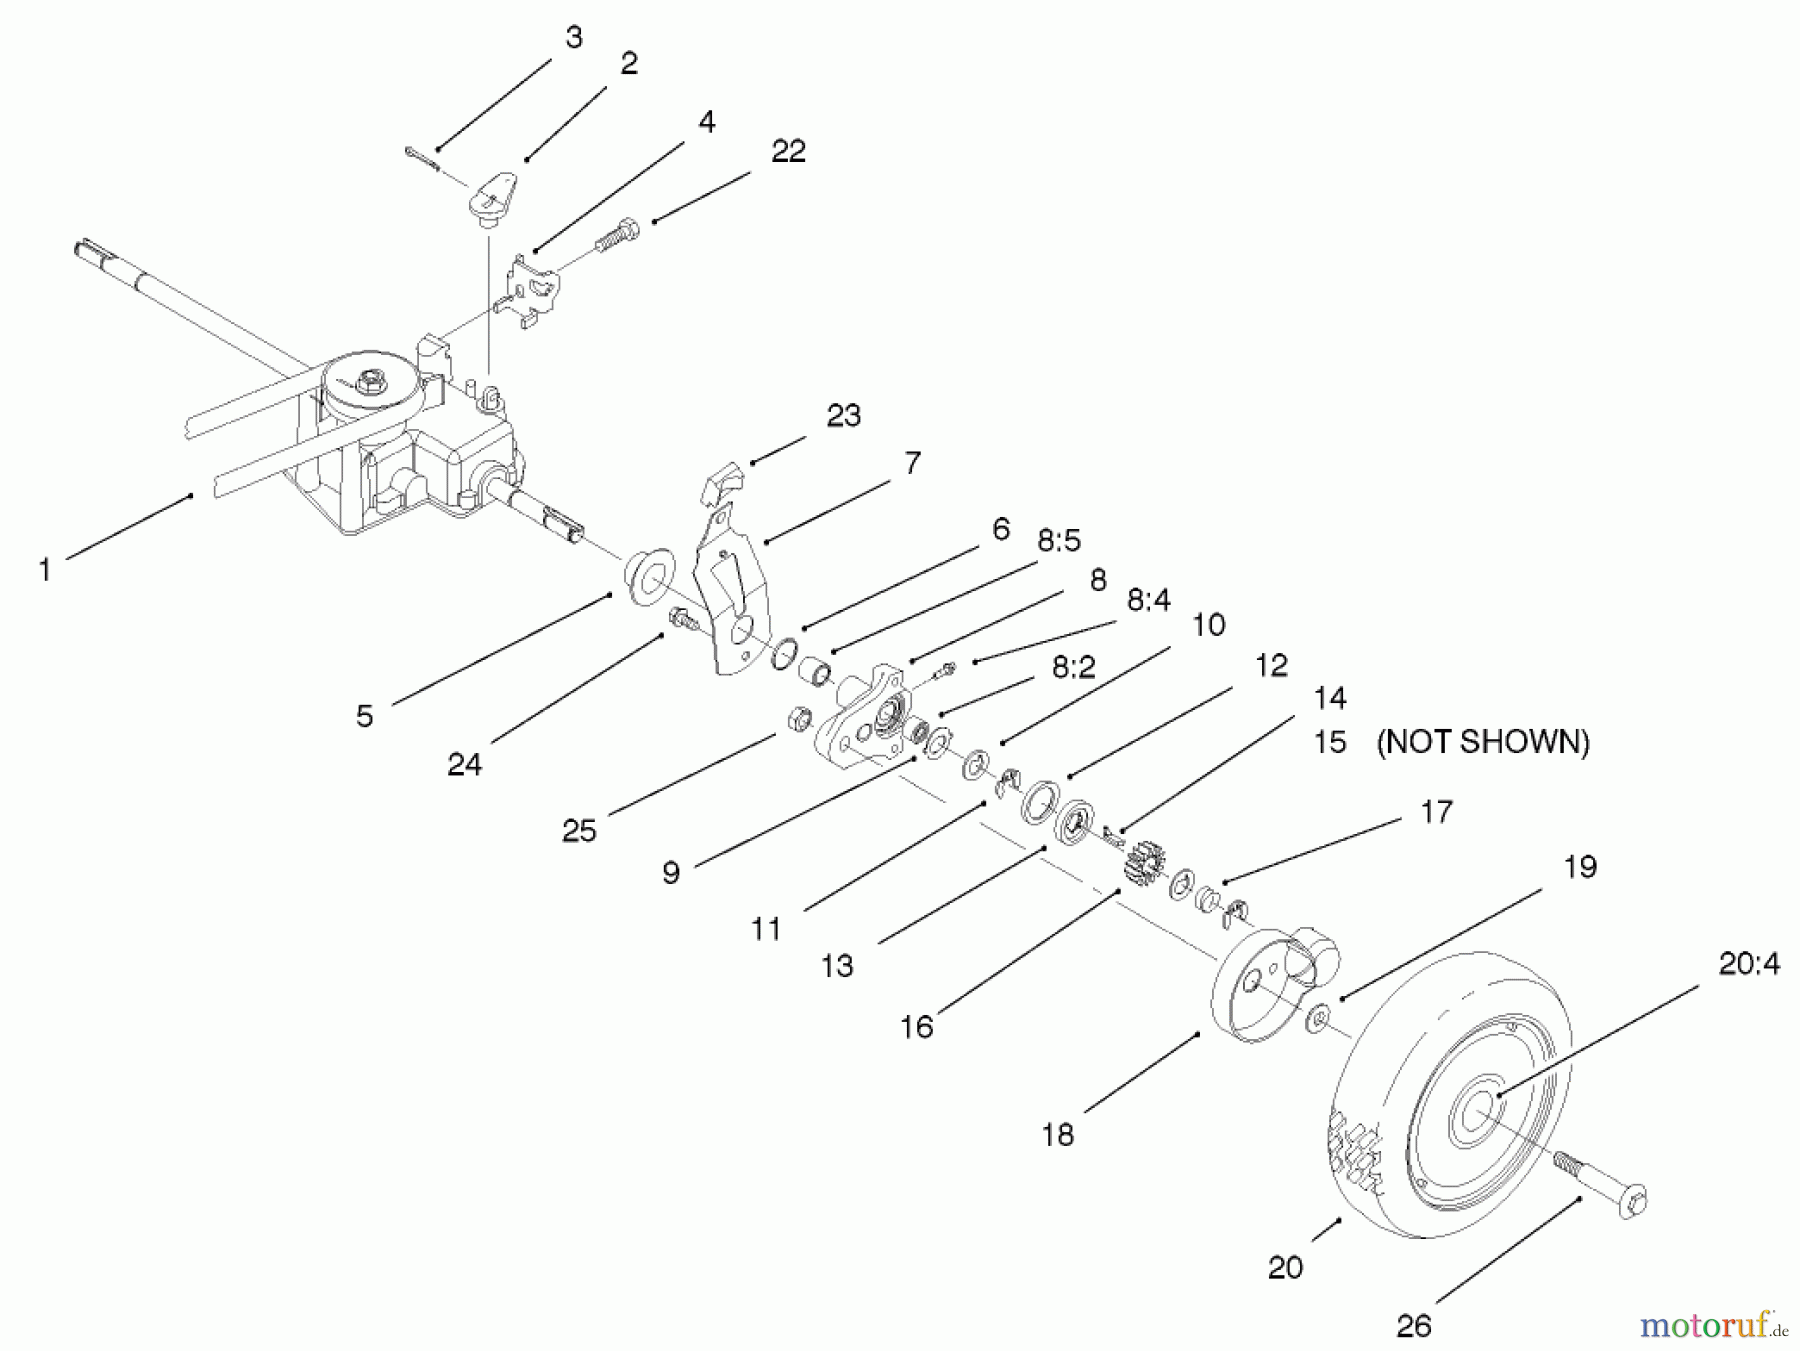  Toro Neu Mowers, Walk-Behind Seite 1 20487 (SR-21OSBB) - Toro Super Recycler Mower, SR-21OSBB, 1999 (9900001-9999999) REAR AXLE ASSEMBLY